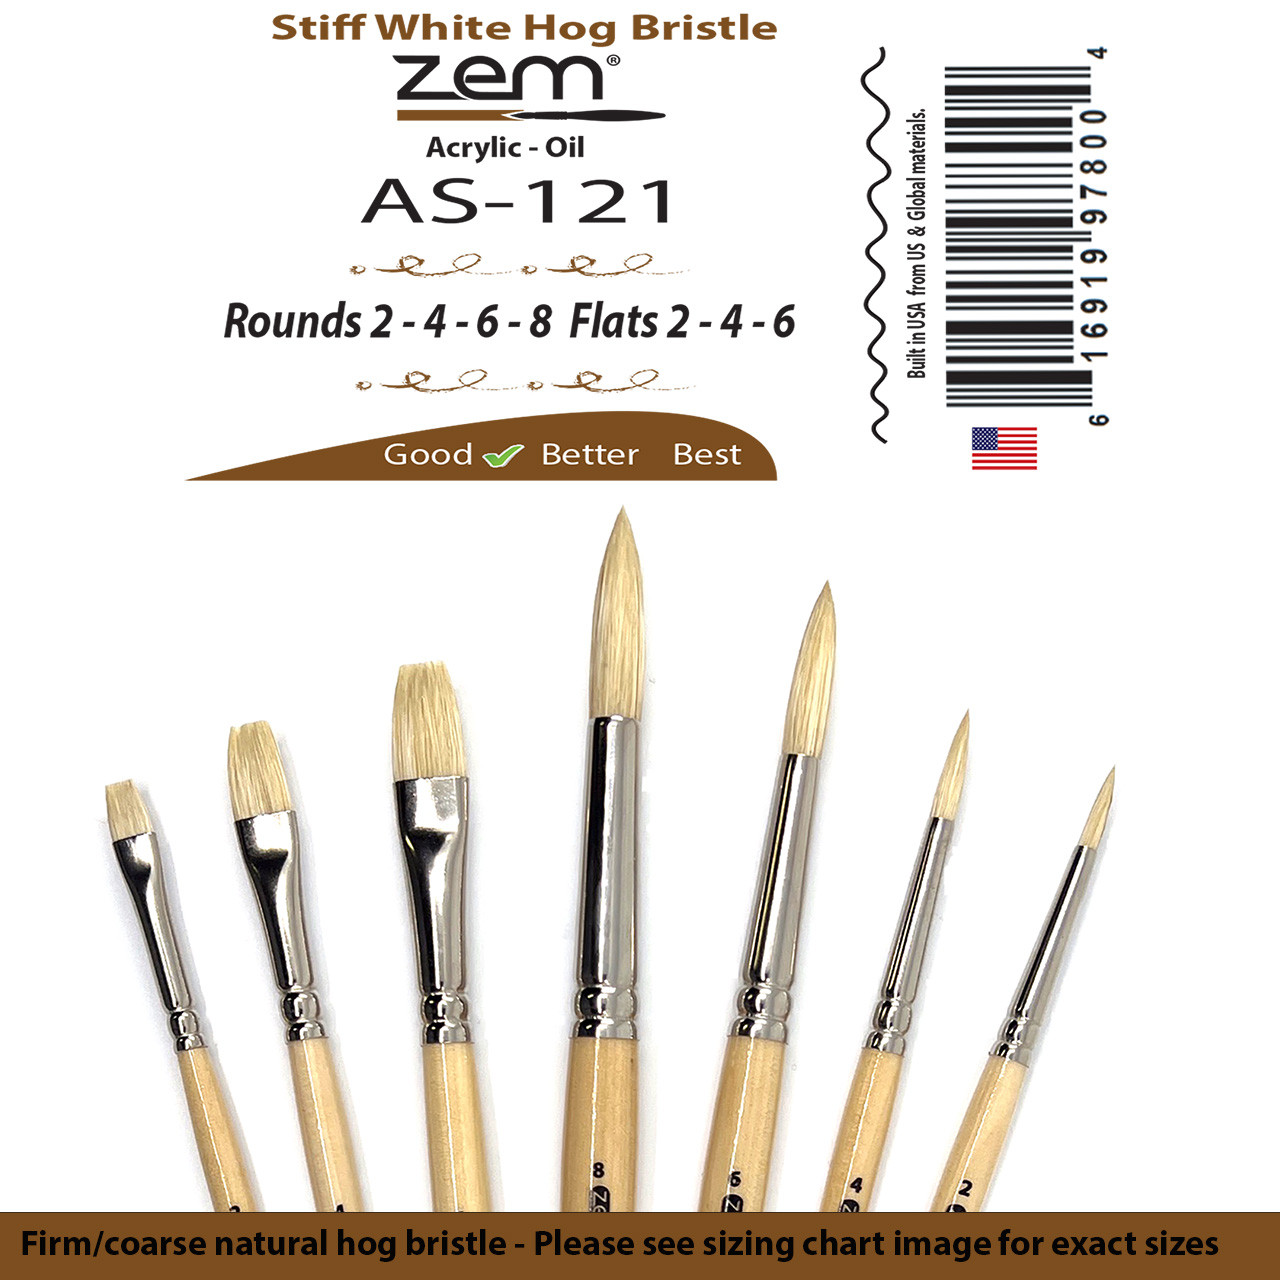 AS-237 White Bristle Synthetic Stencil Brush Set 7 pcs